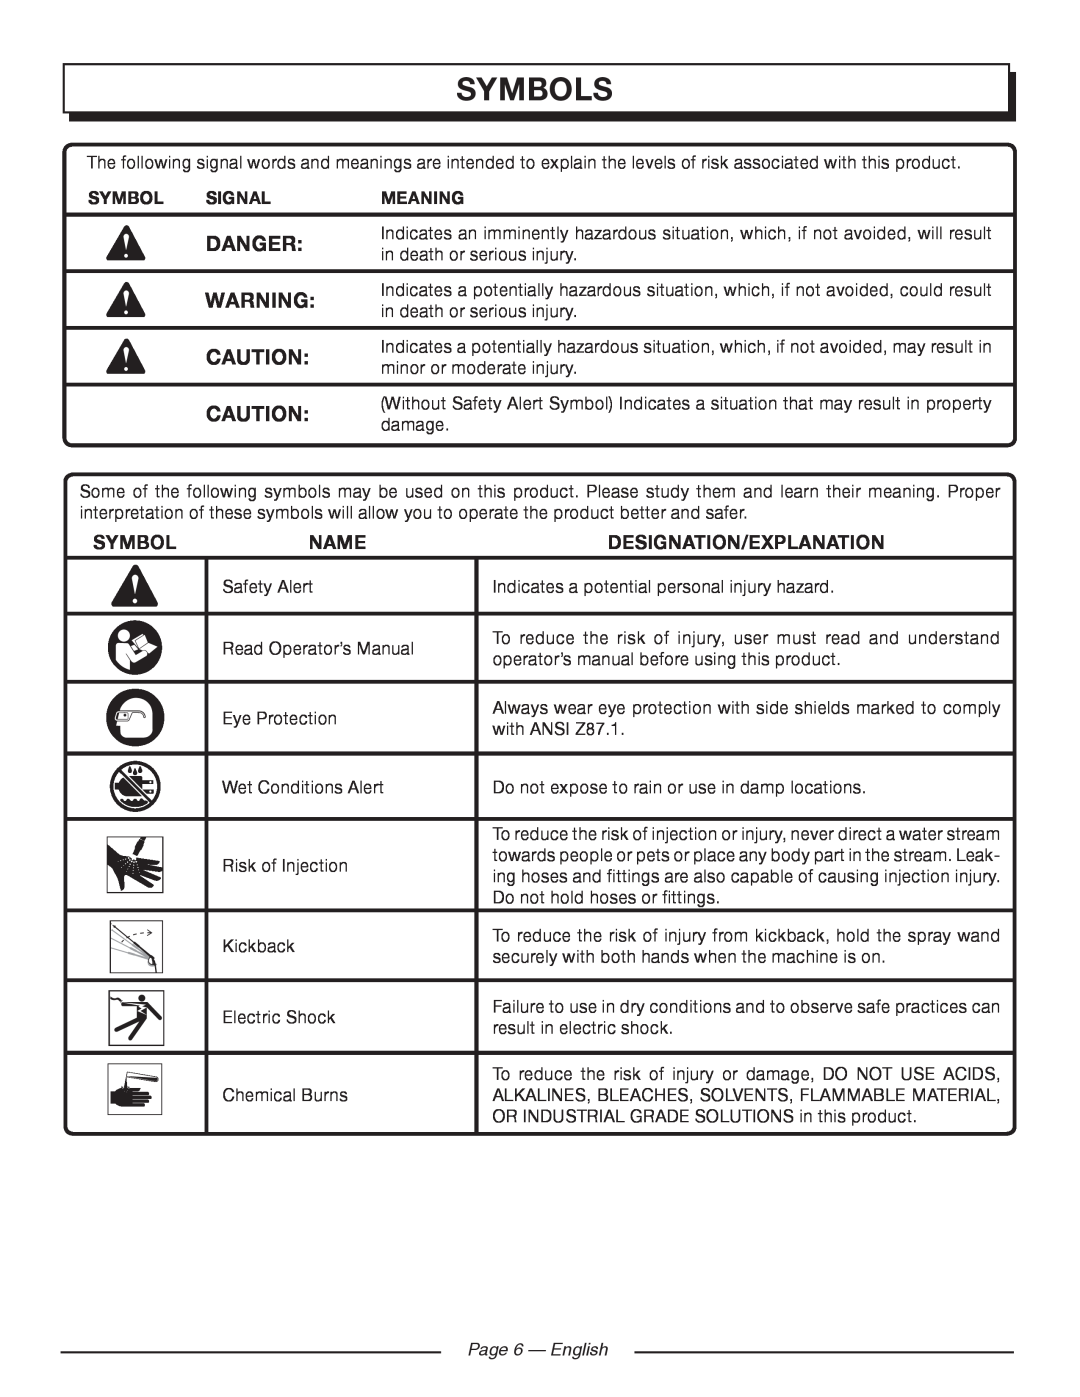 Homelite UT80720 manuel dutilisation Symbols, Danger, Name, Designation/Explanation, Page 6 - English 